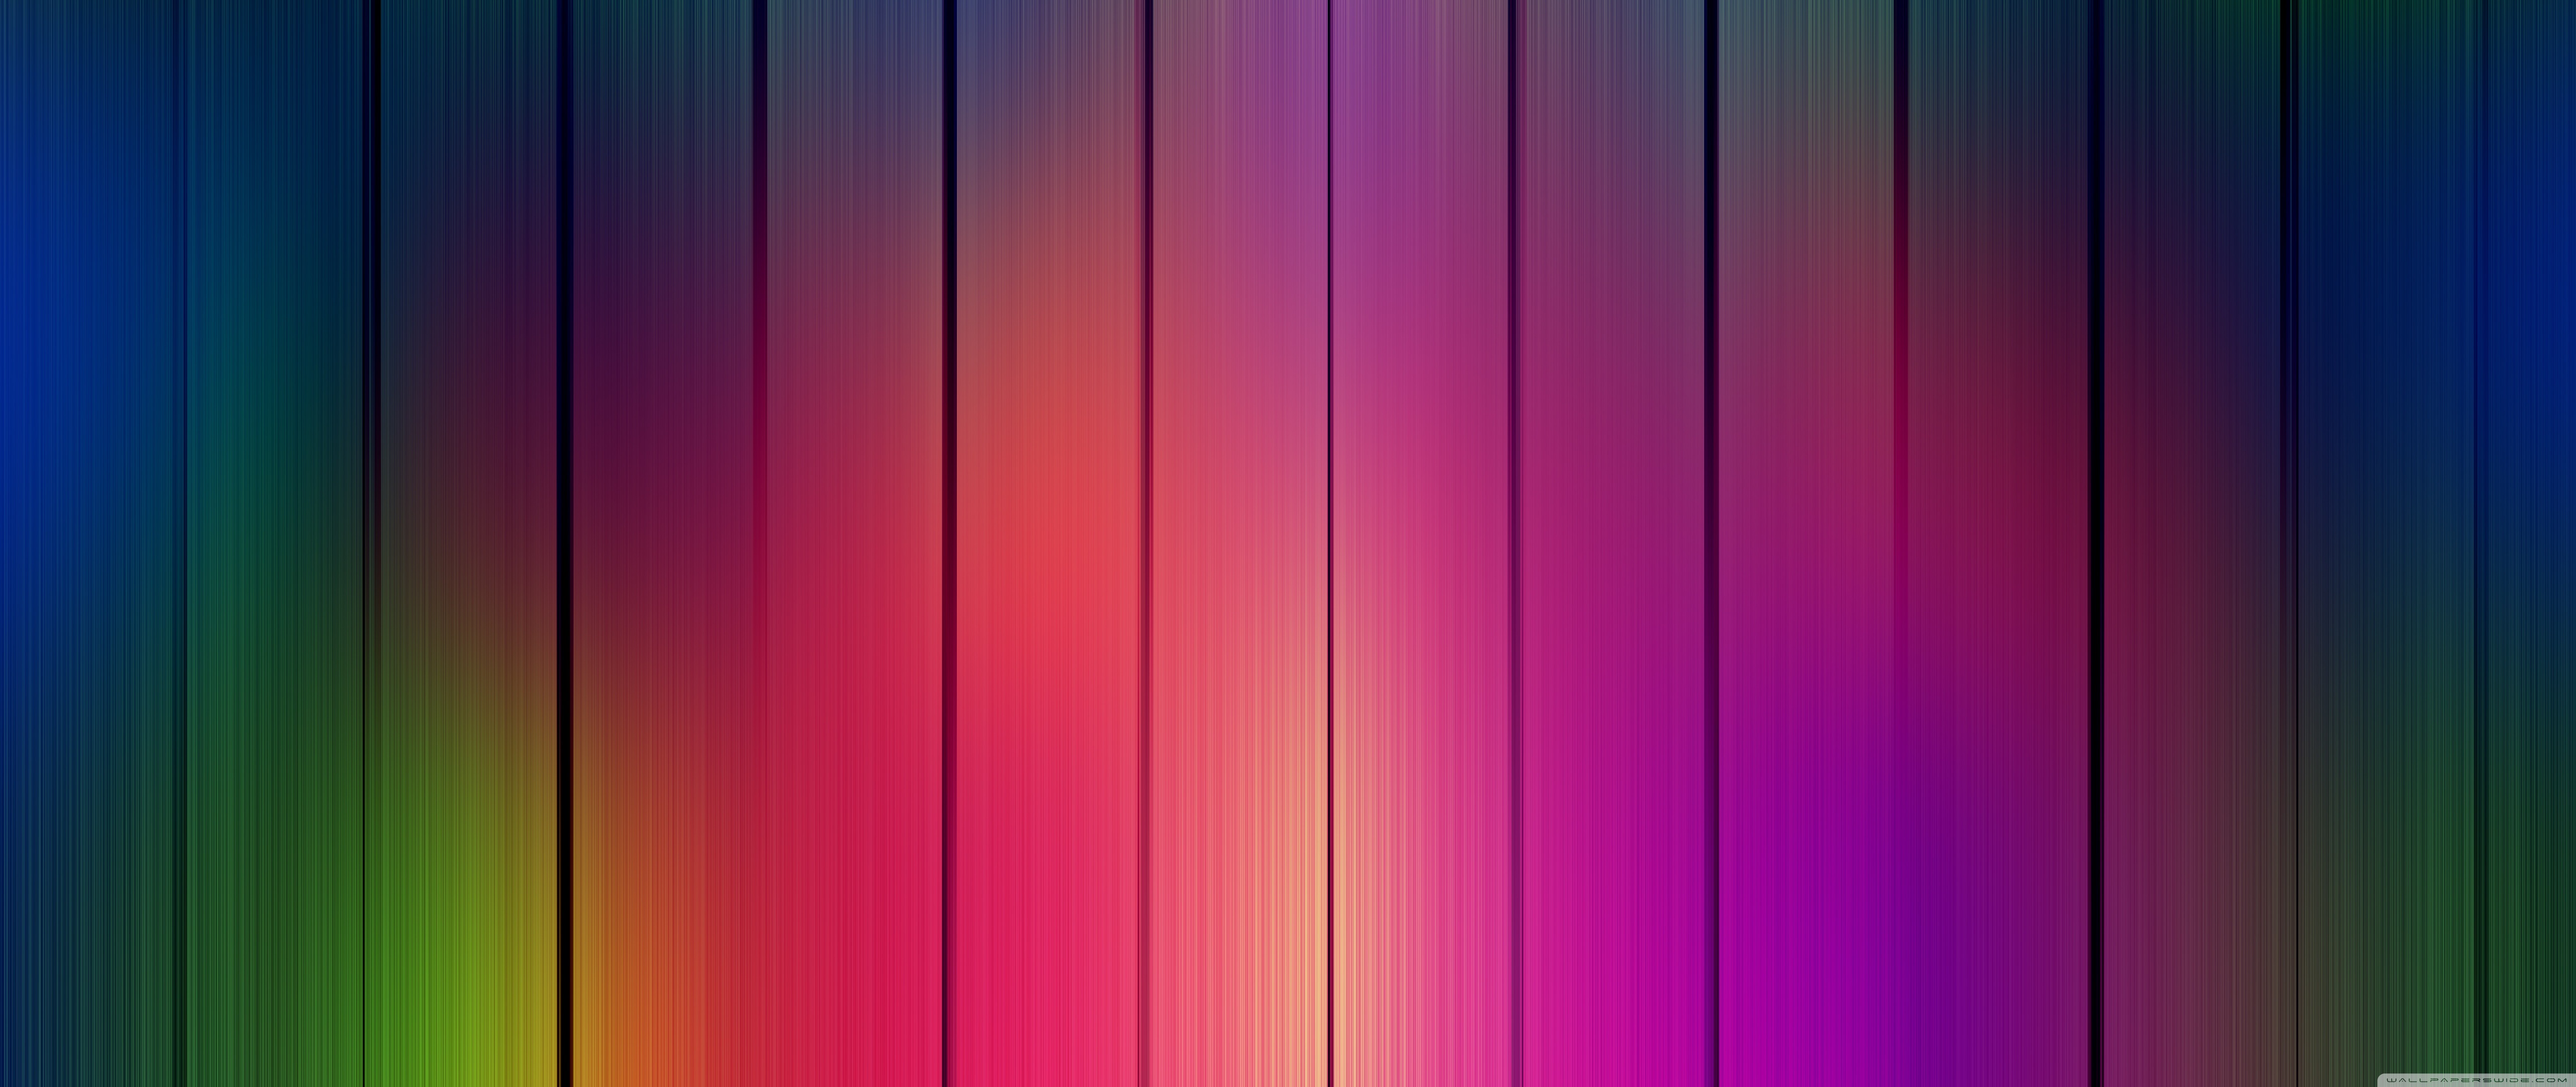 Fomef Woodmix Colorful 5k Ultra HD Desktop Background Wallpaper